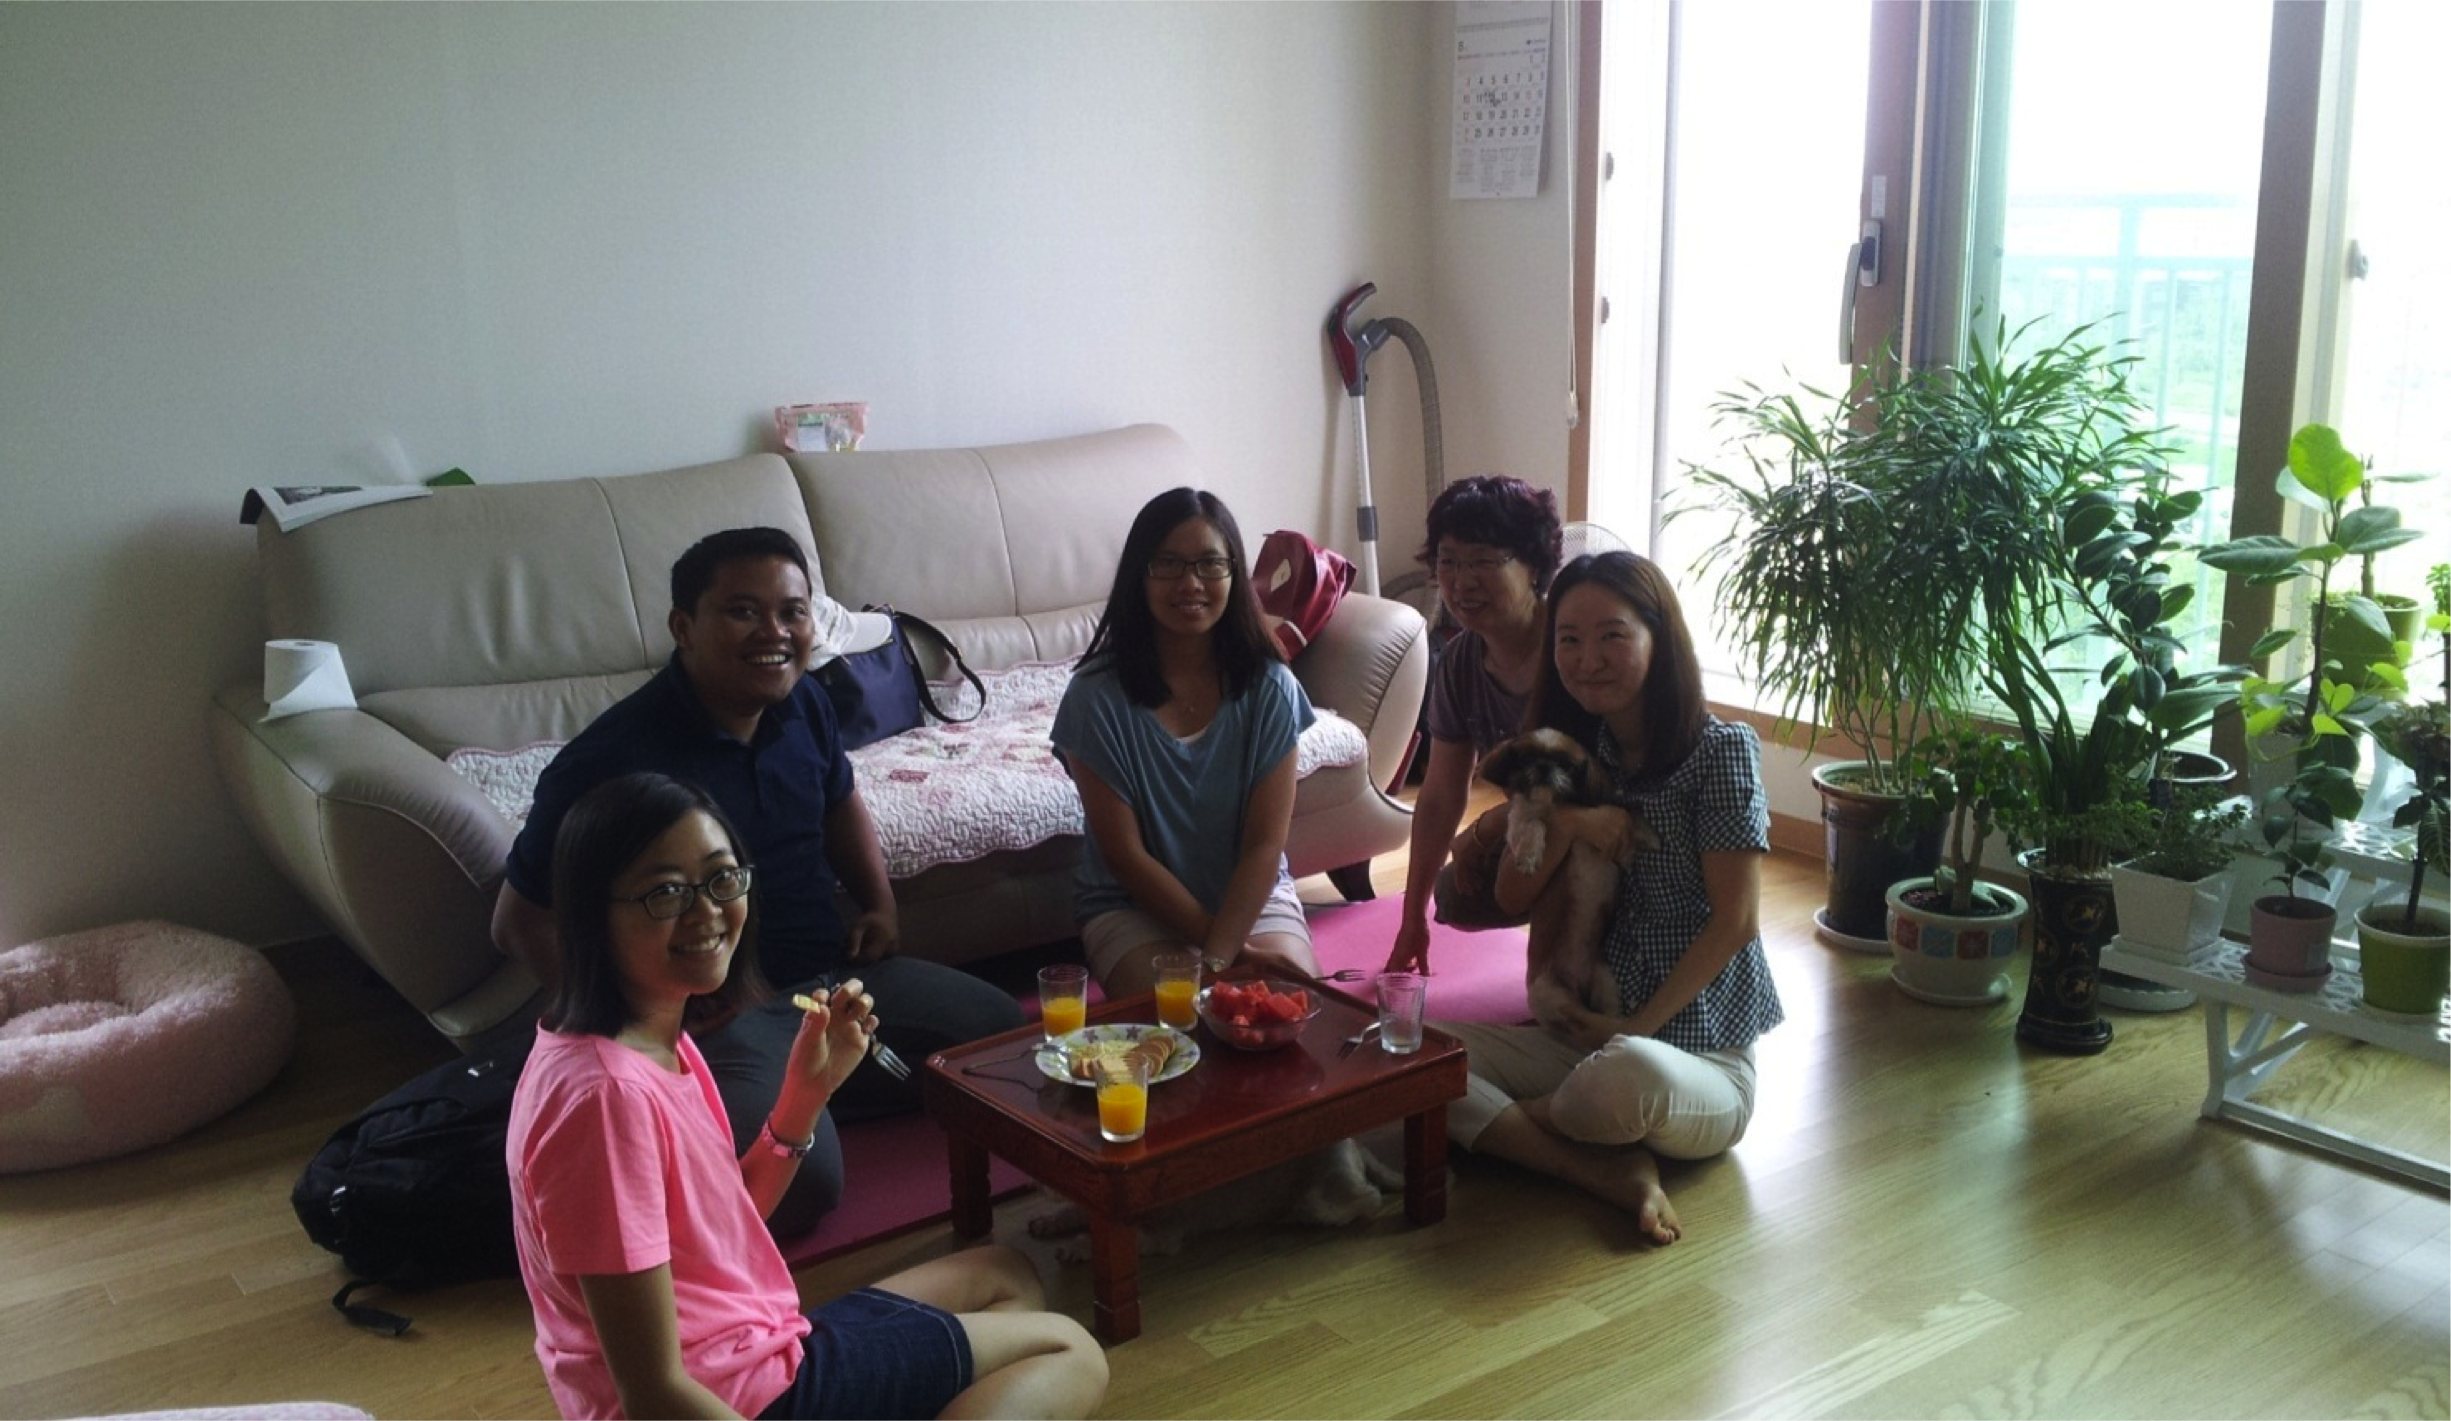 Home Visiting Program: make Korean friends, learn Korean cultures